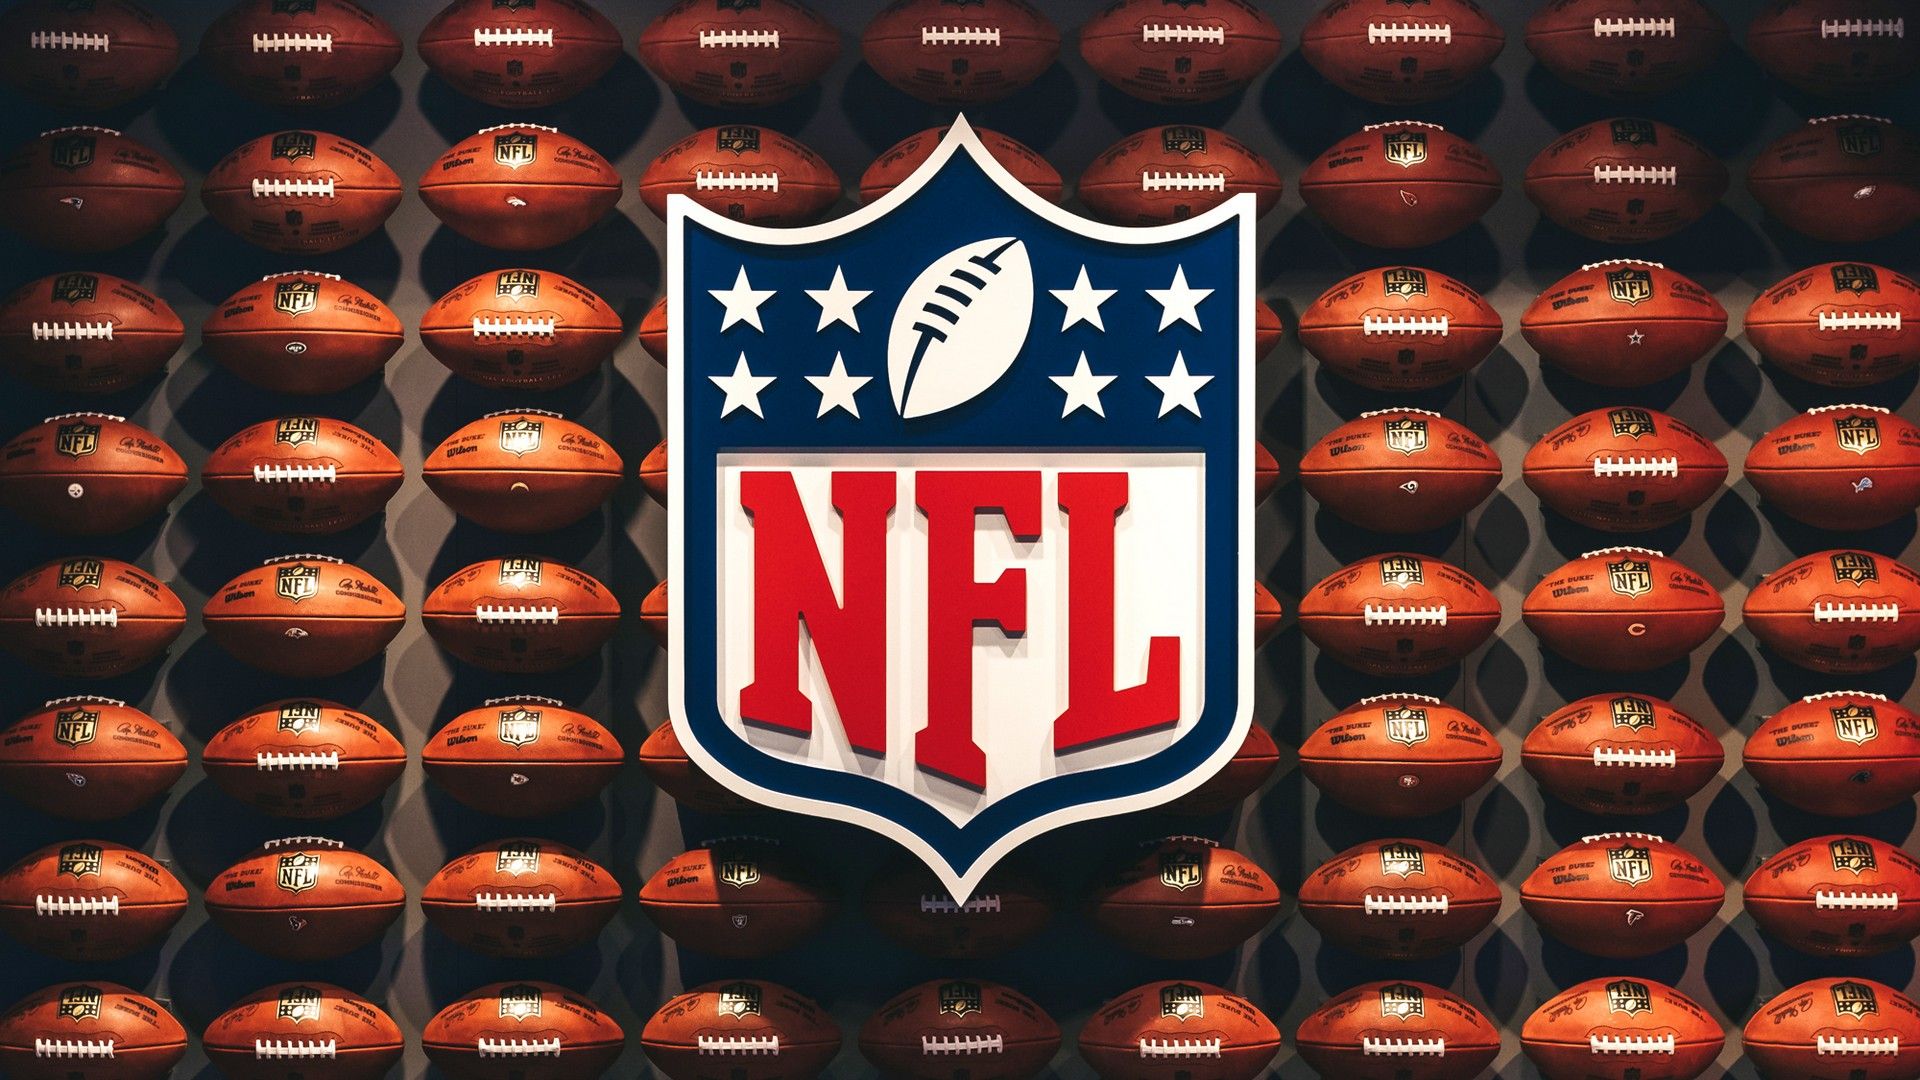 NFL For Mac Wallpaper NFL Football Wallpaper. Nfl football wallpaper, Football wallpaper, Nfl